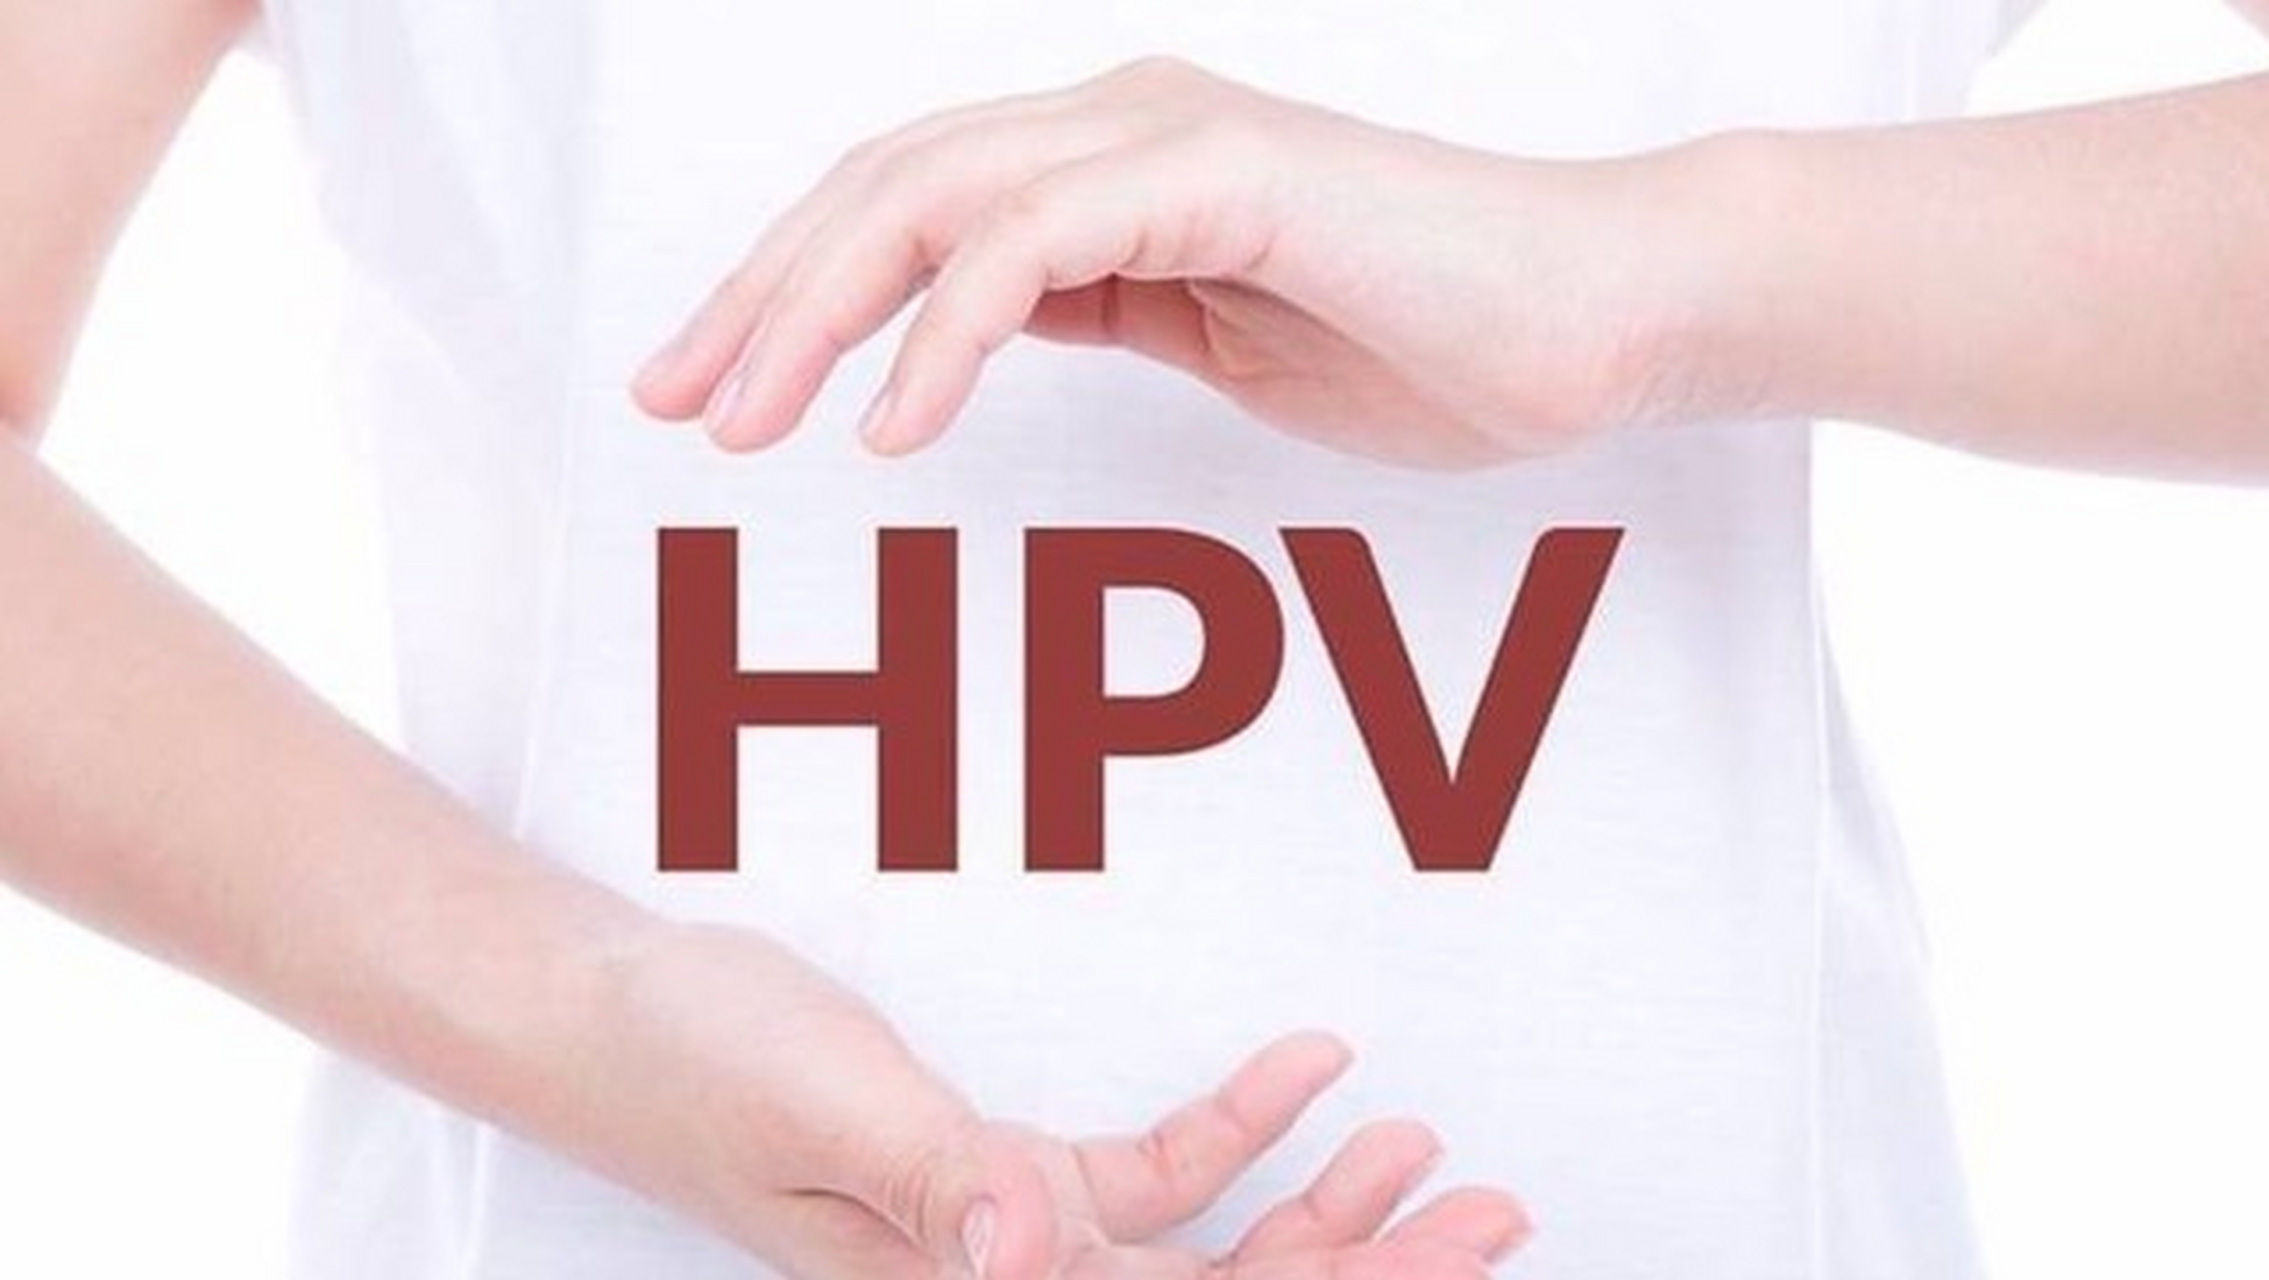 hpv是查血还是分泌物 hpv即人乳头瘤病毒,人乳头瘤病毒一般是查分泌物